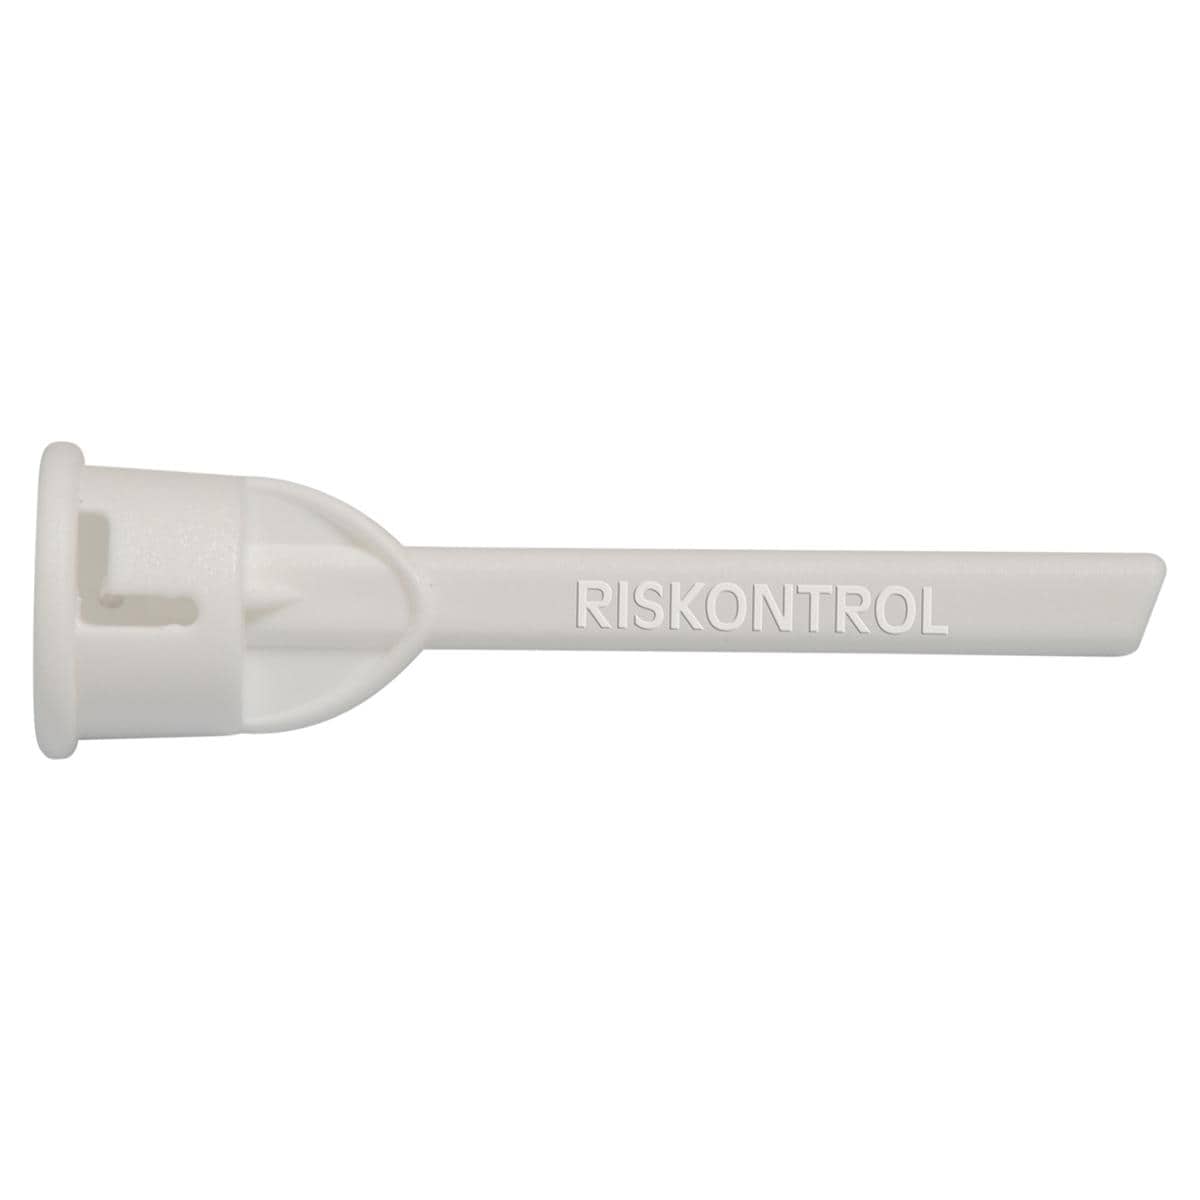 Riskontrol® ART Einwegansätze - Menthol / weiß, Packung 250 Stück